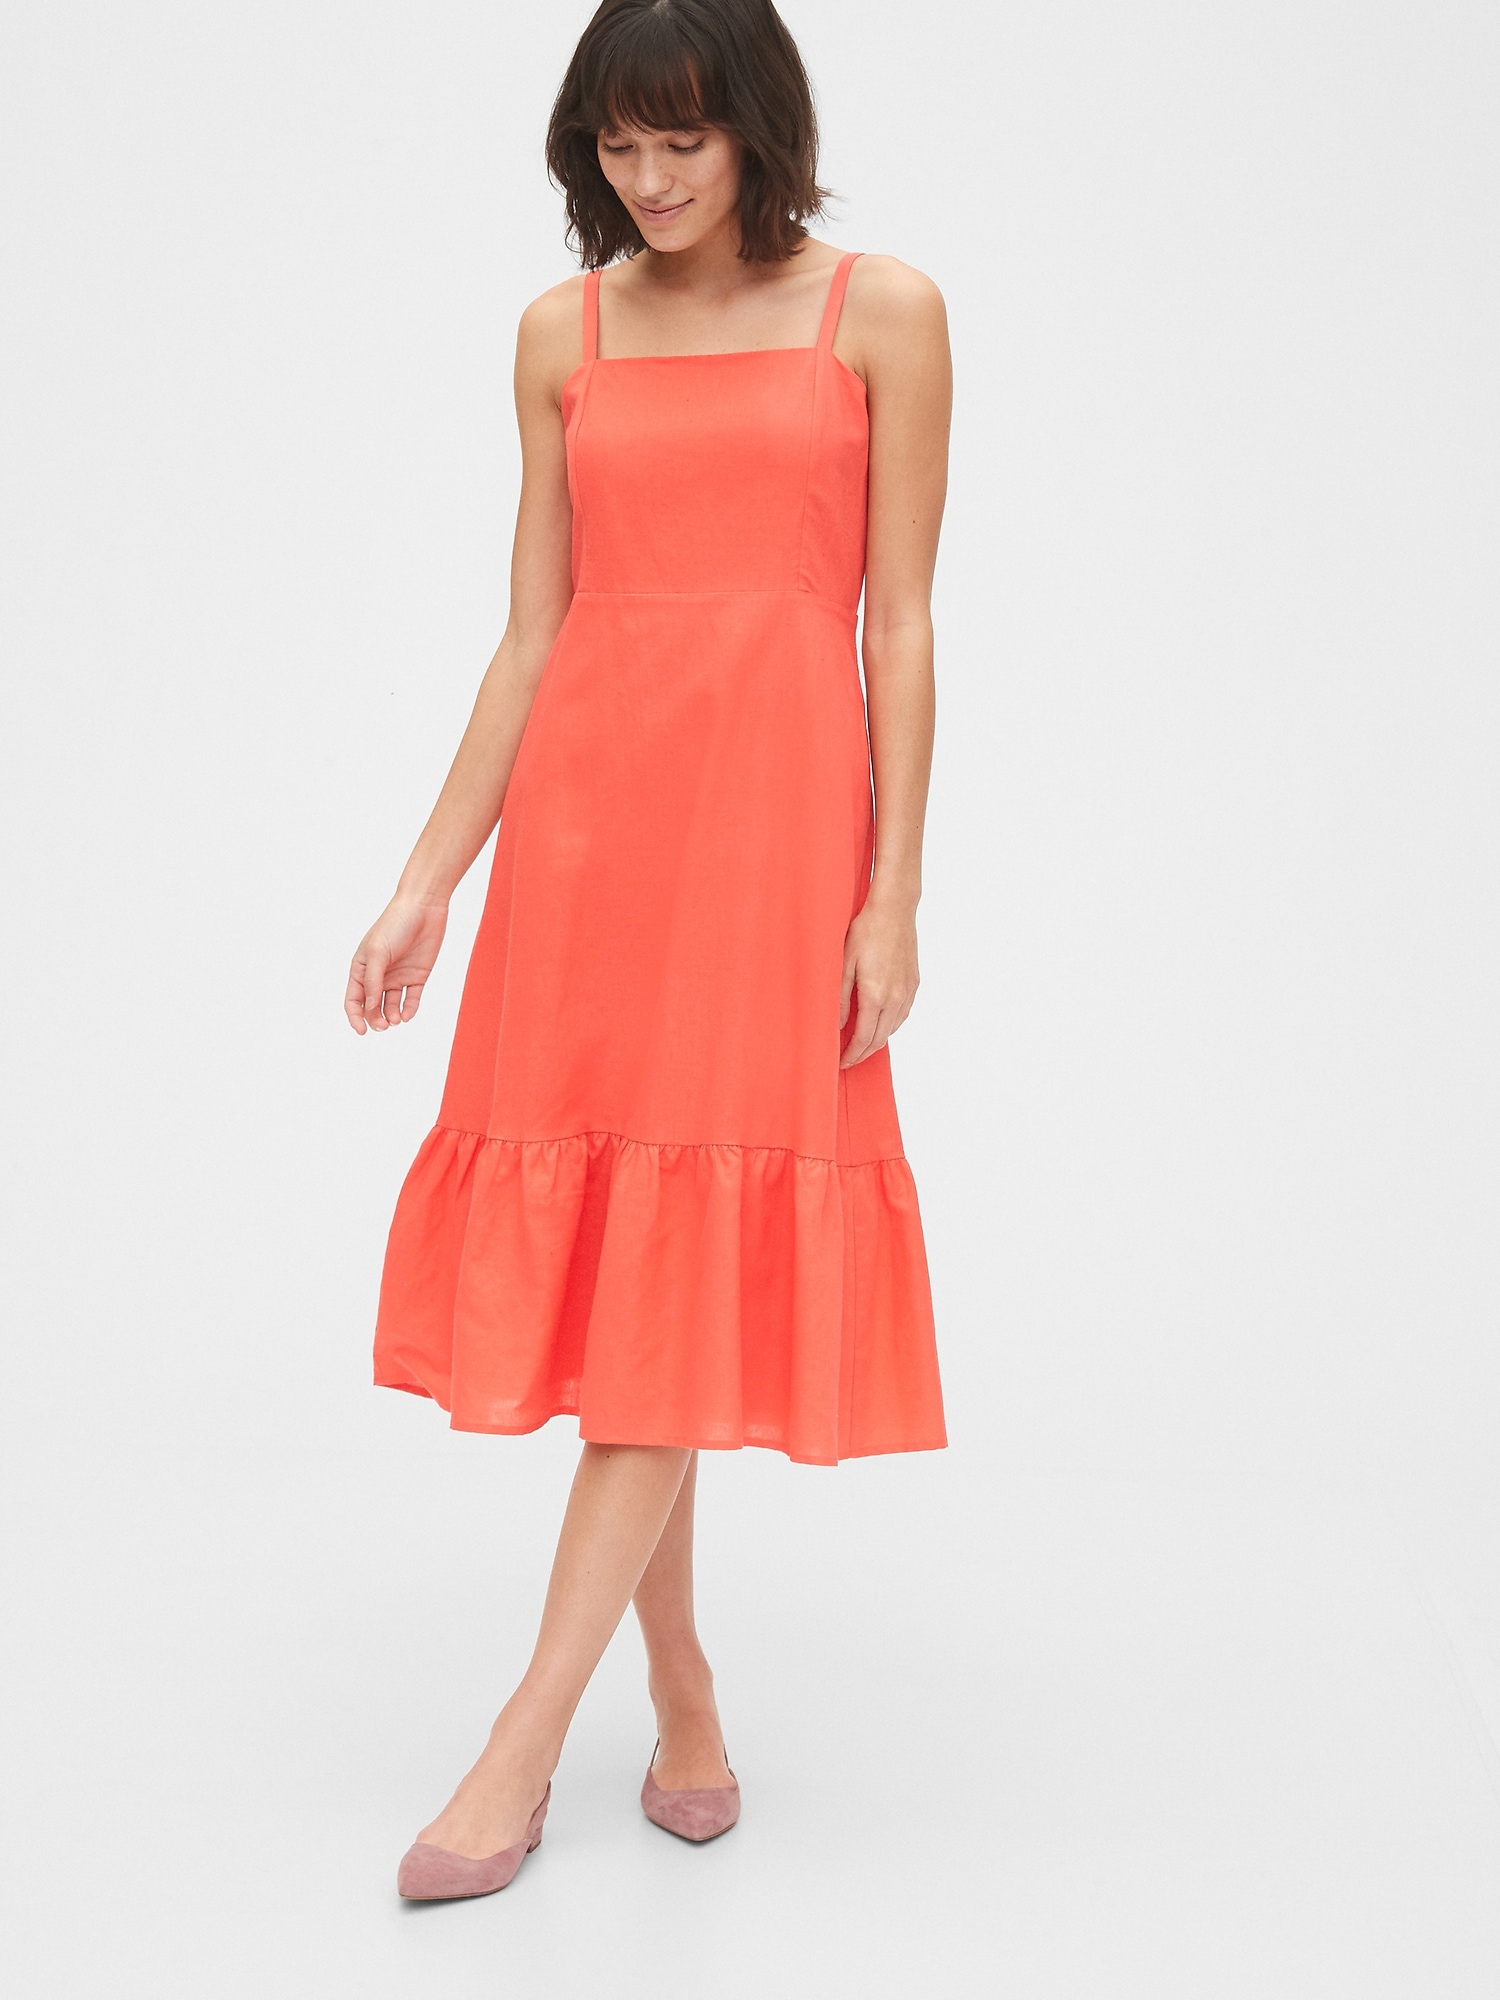 gap orange dress